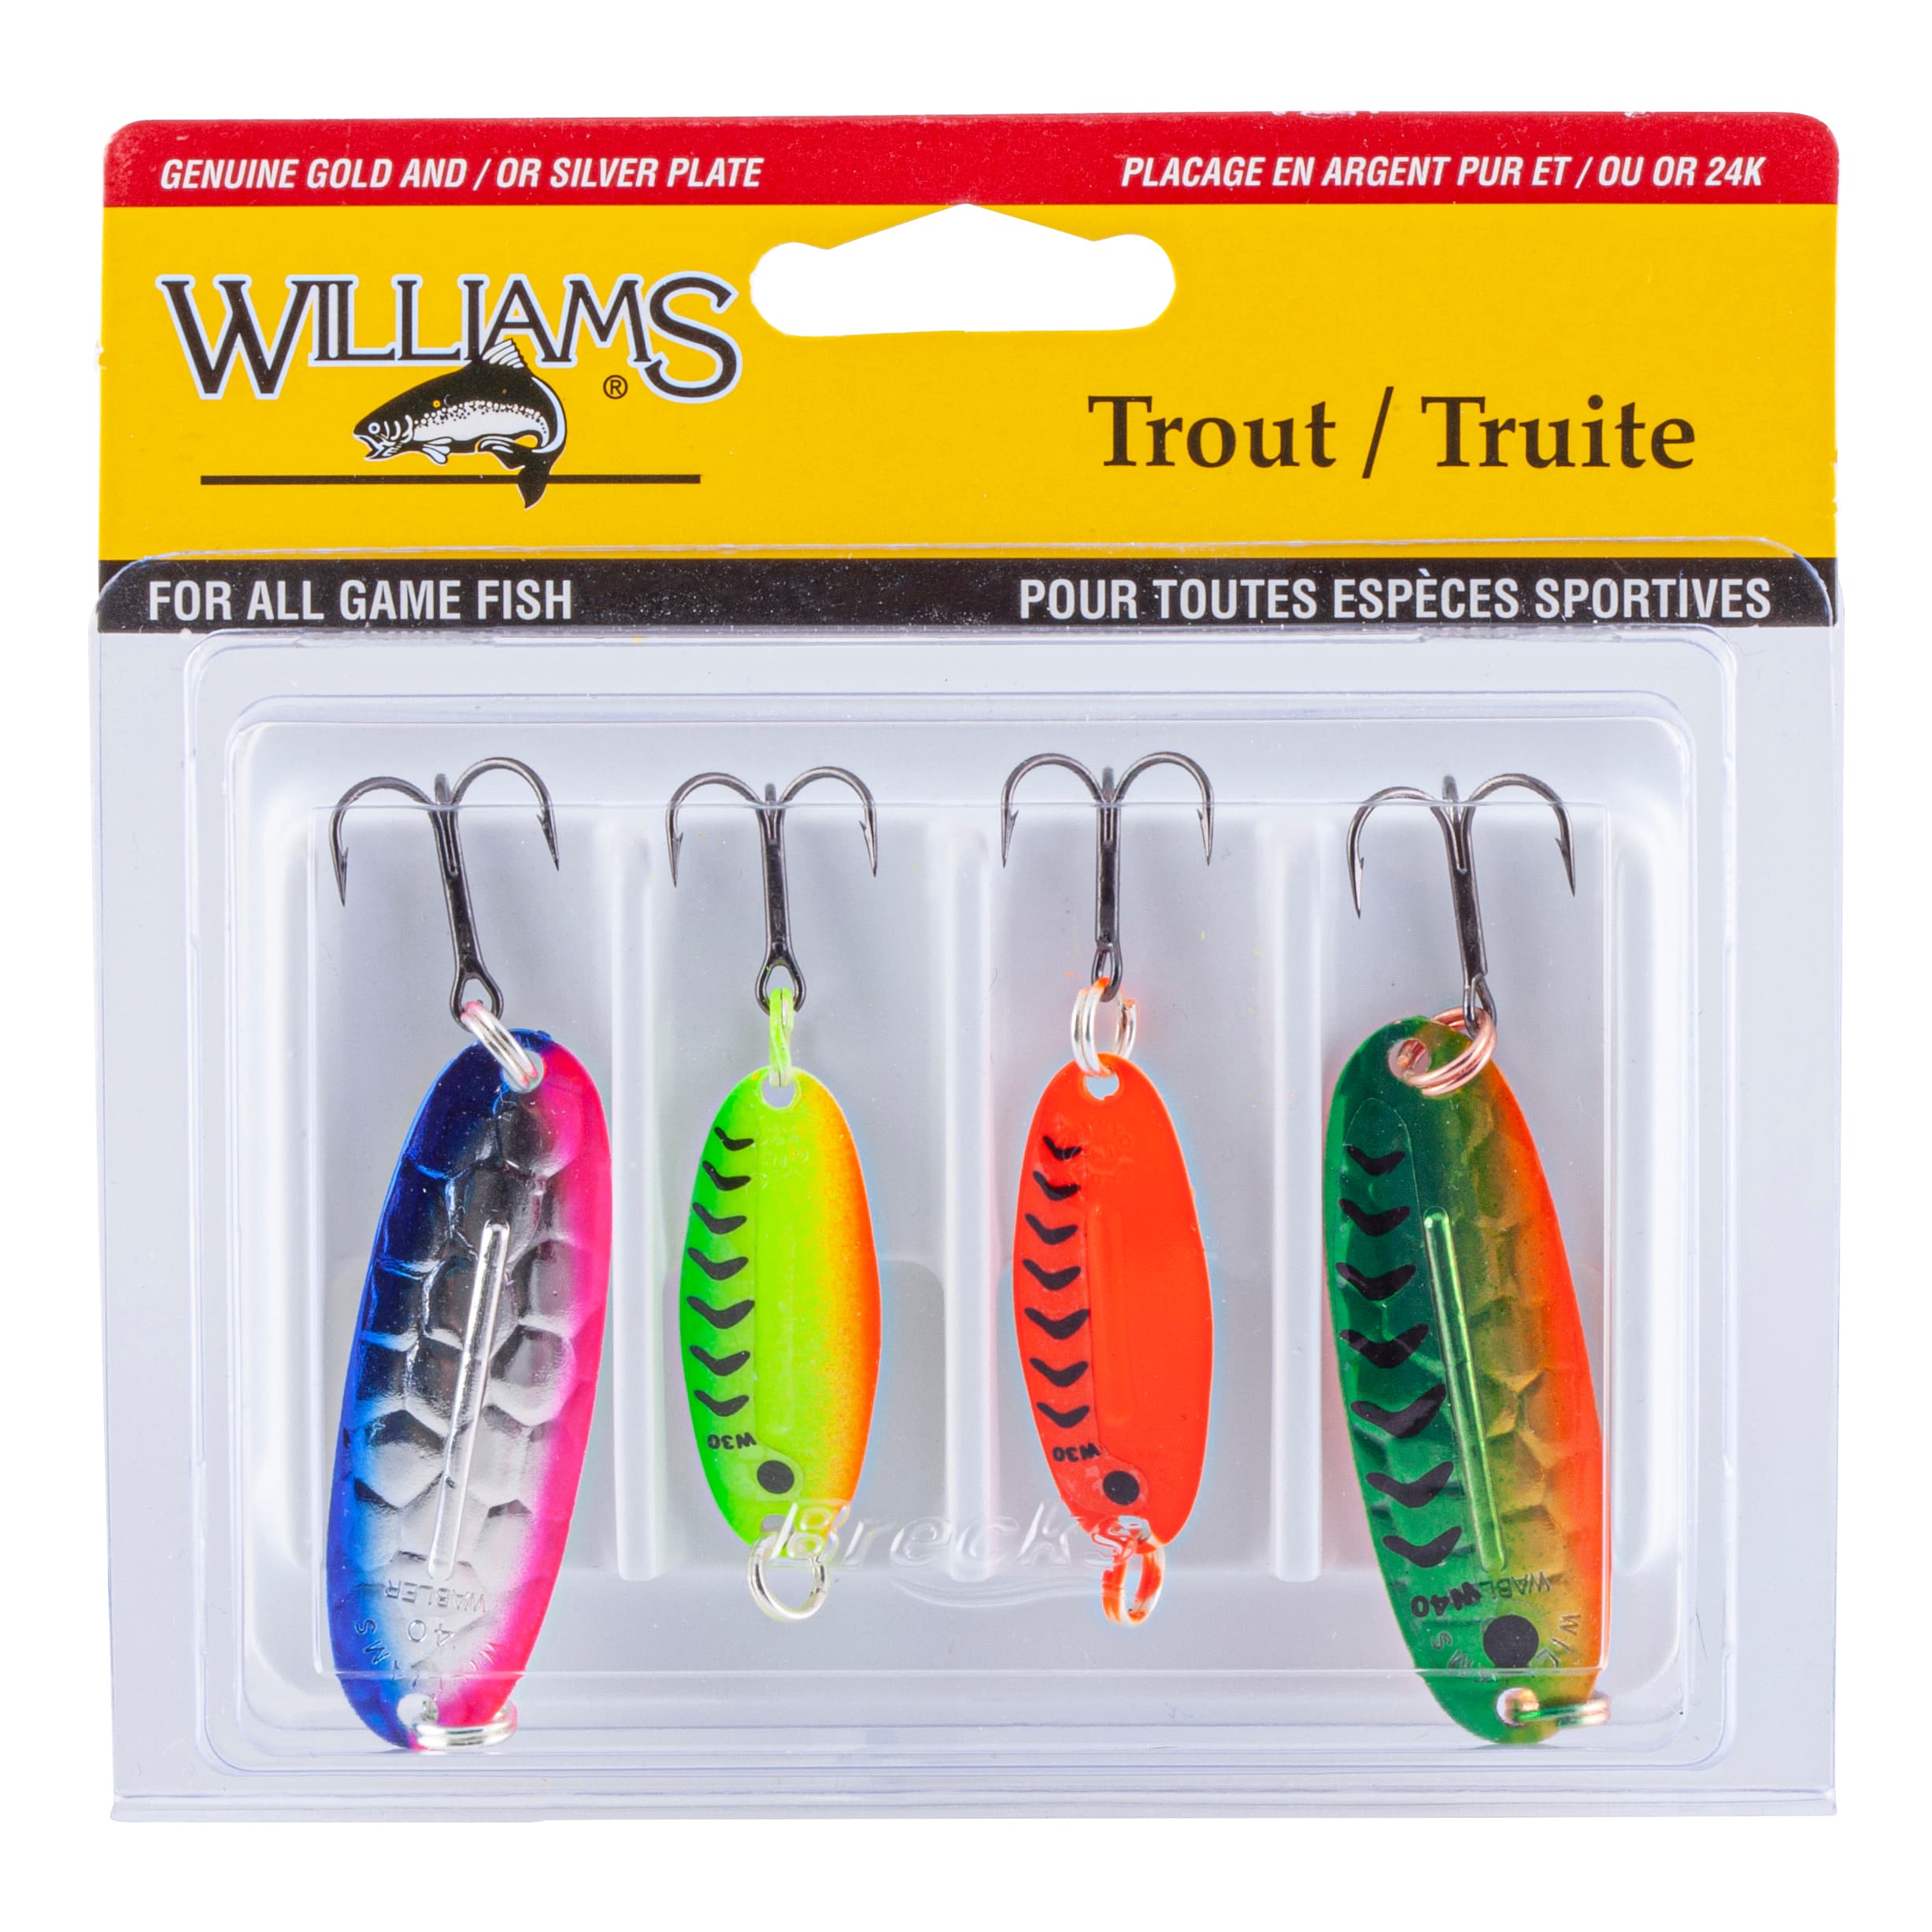 Williams Pike/Walleye Lure Kit, 4-pk